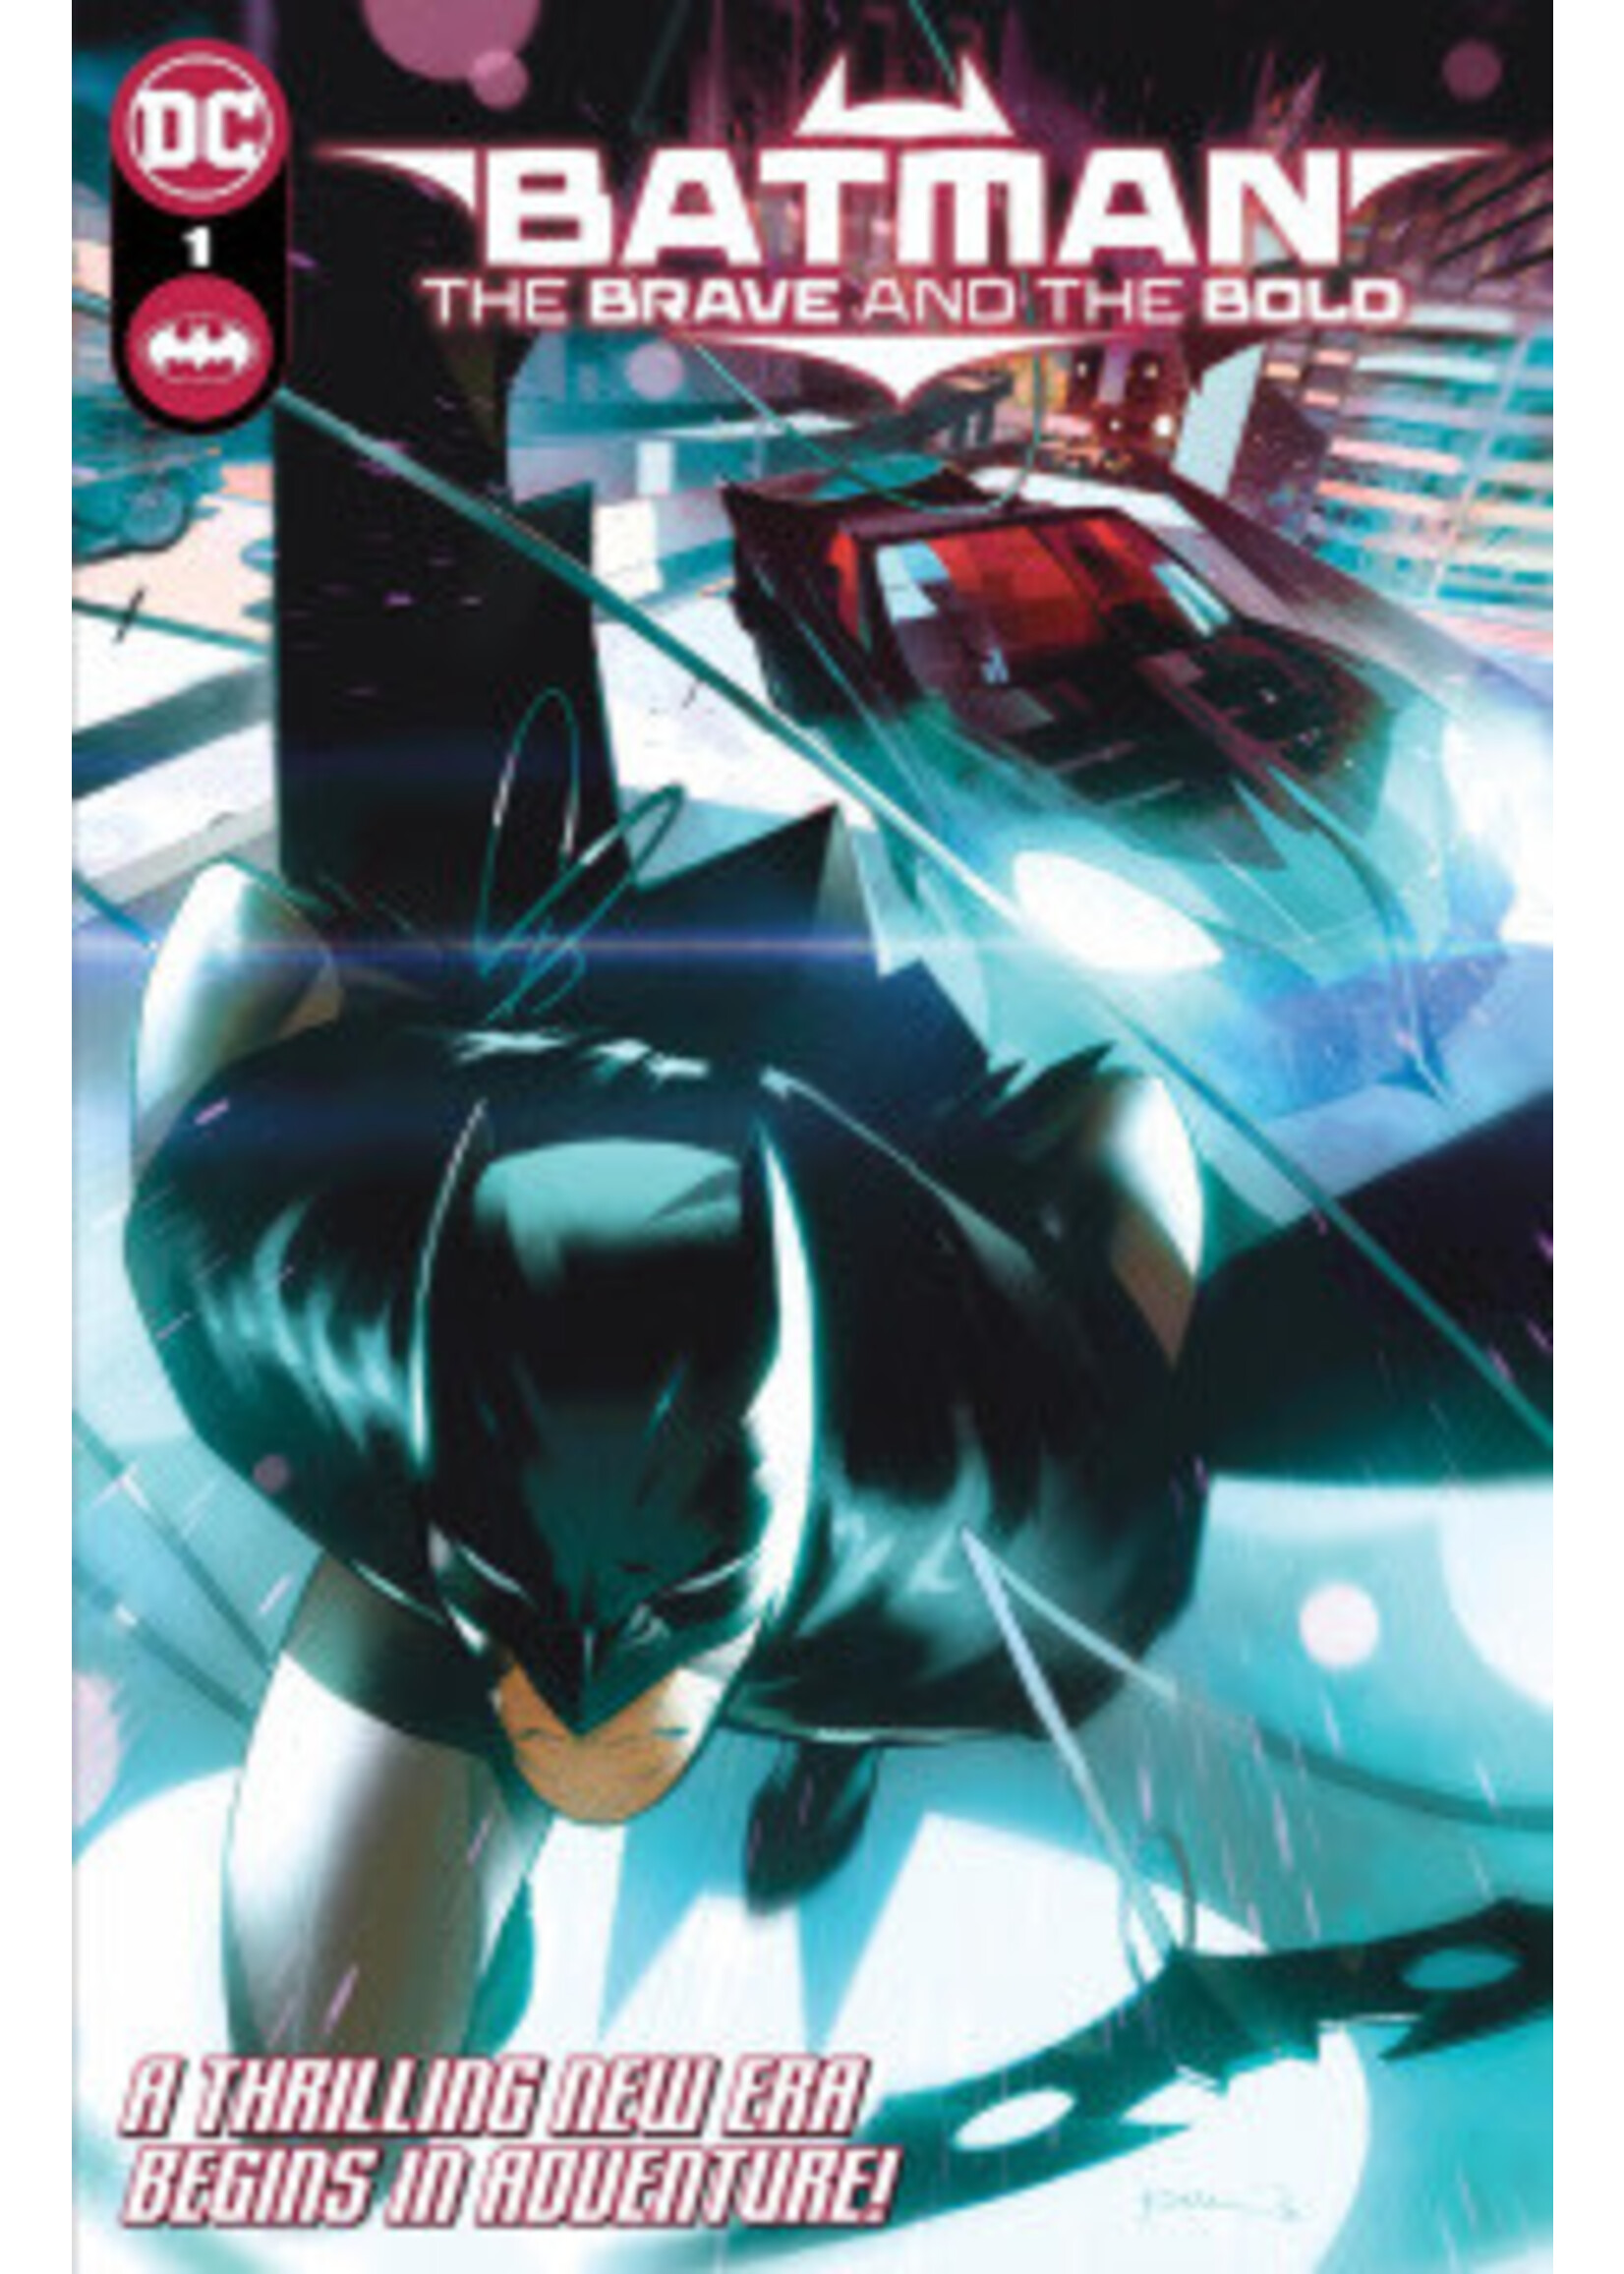 DC COMICS BATMAN THE BRAVE AND THE BOLD #1